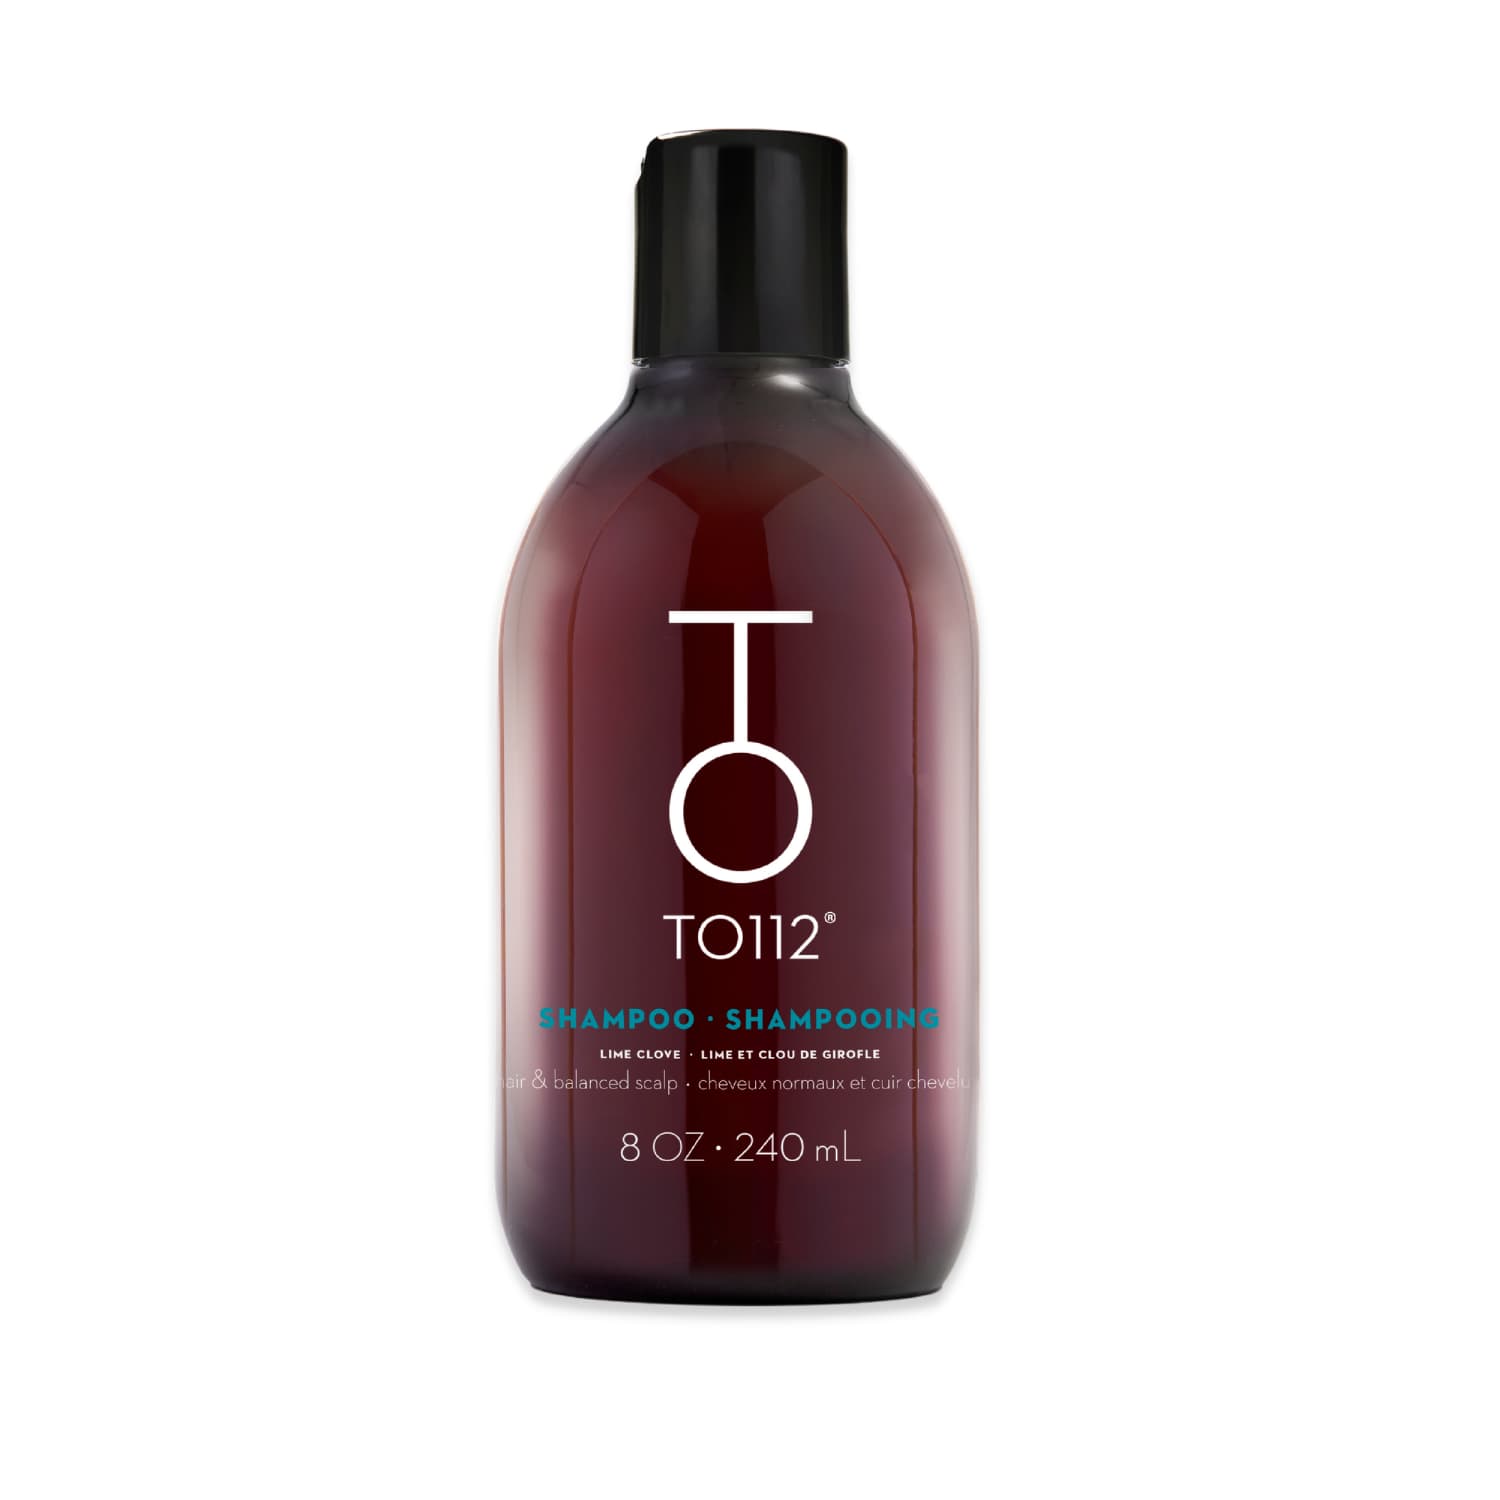 TO112 Shampoo for Normal Hair & Balanced Scalps 8oz